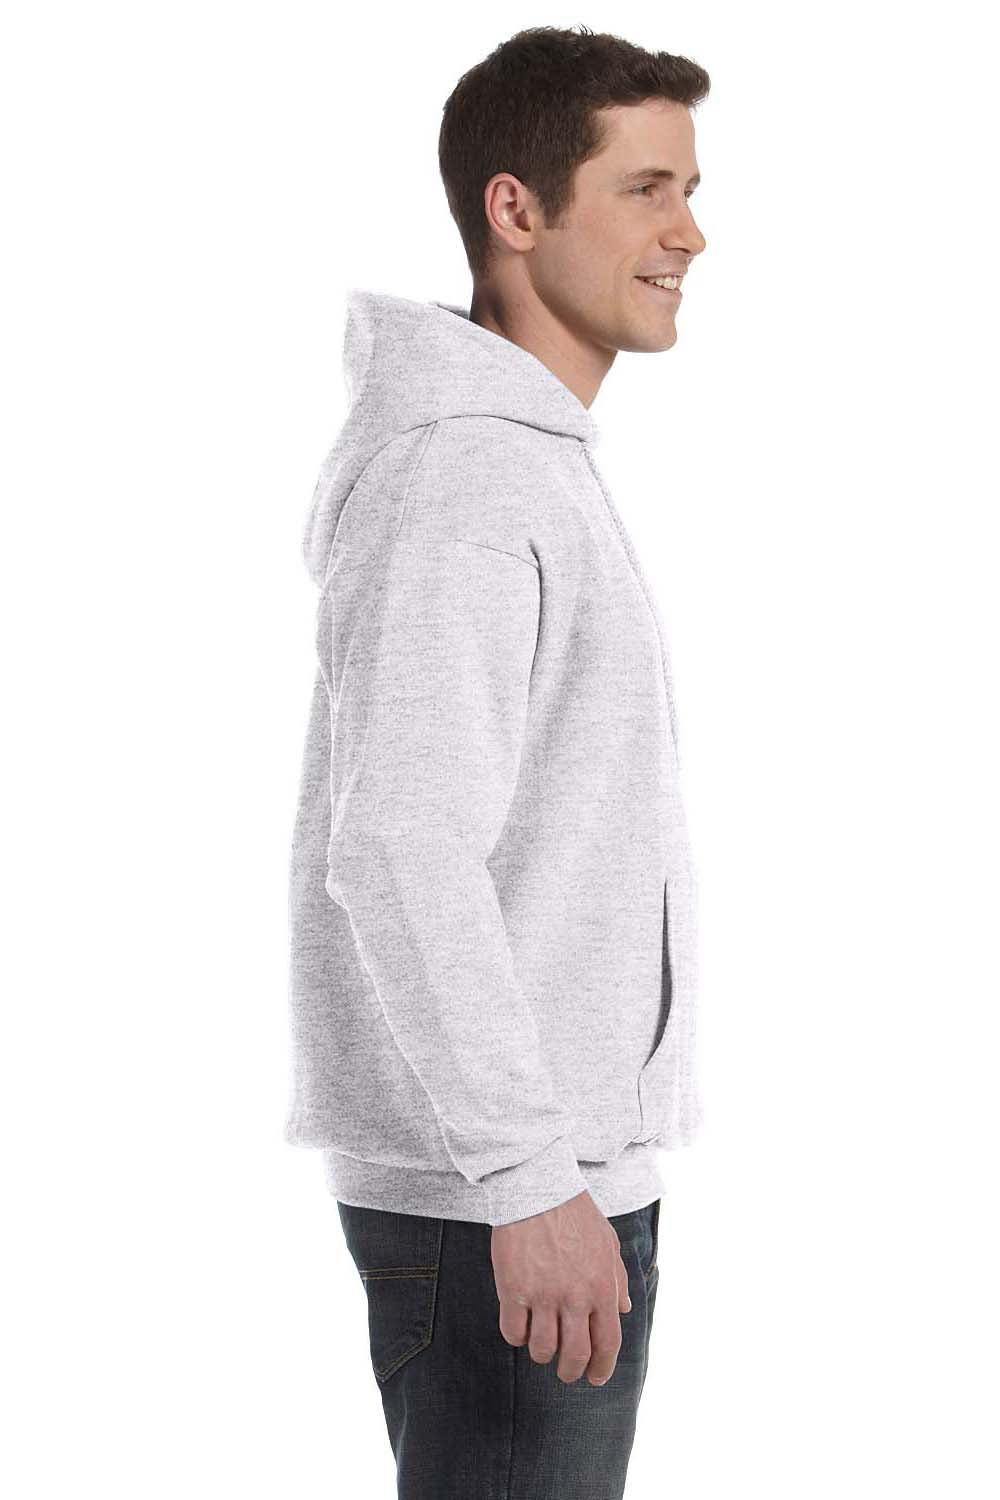 Hanes P170 Mens EcoSmart Print Pro XP Hooded Sweatshirt Hoodie Ash Grey Side